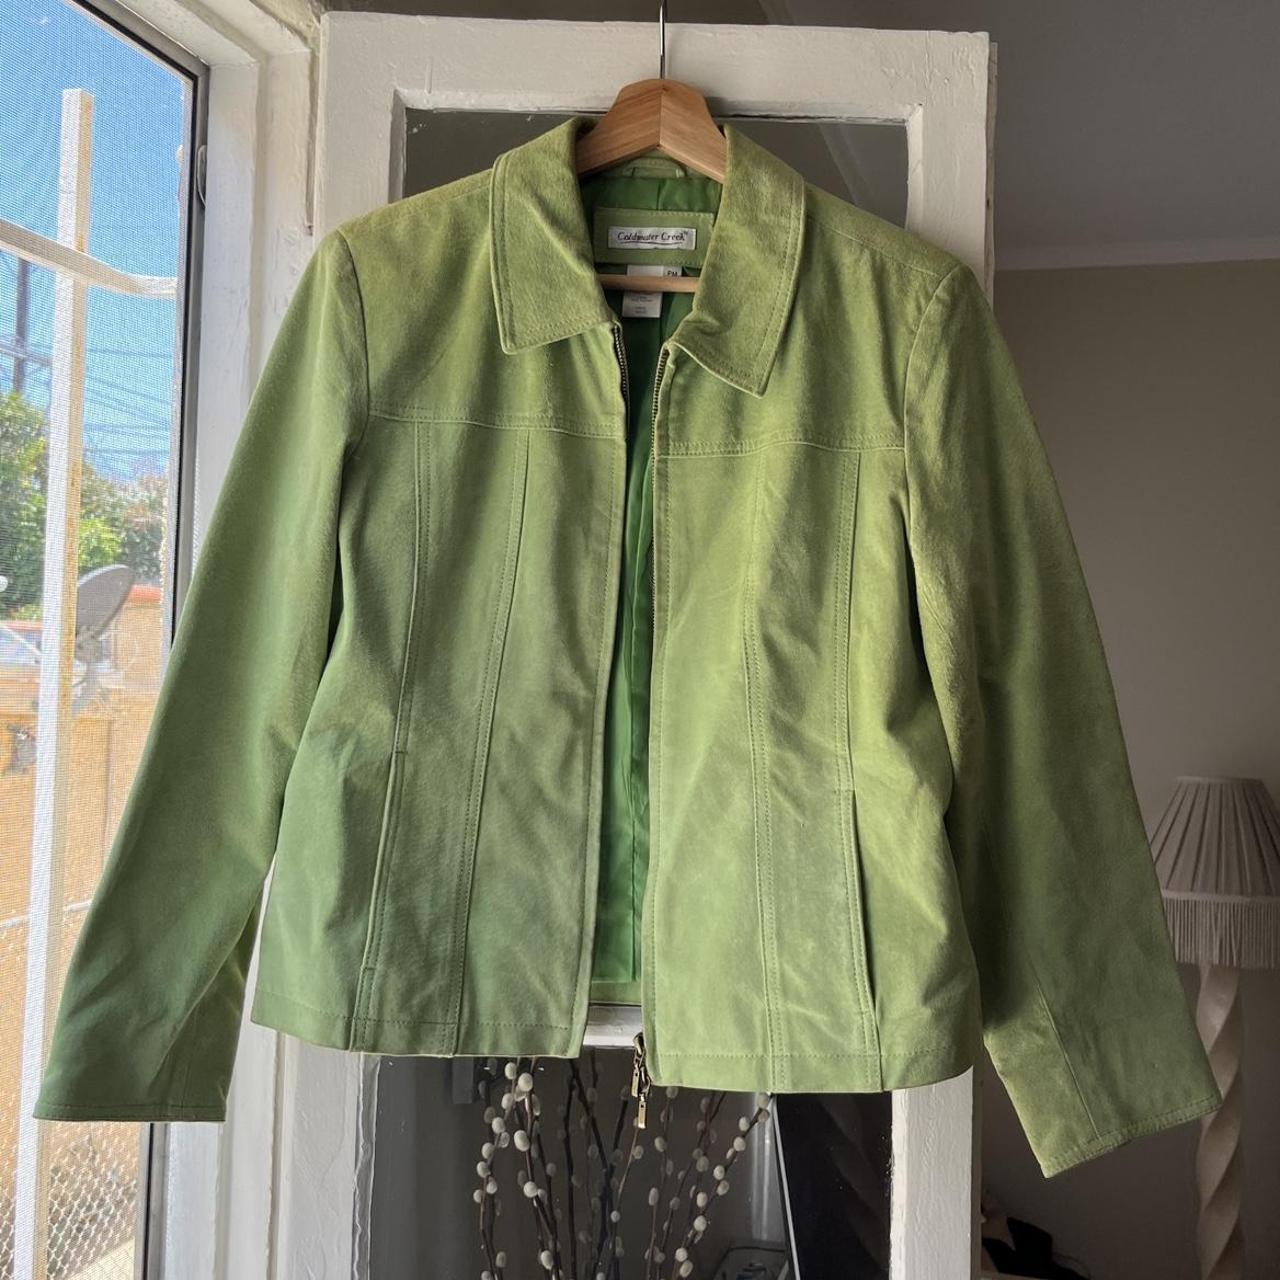 Bright Green Suede Jacket Petite Medium but fits... - Depop